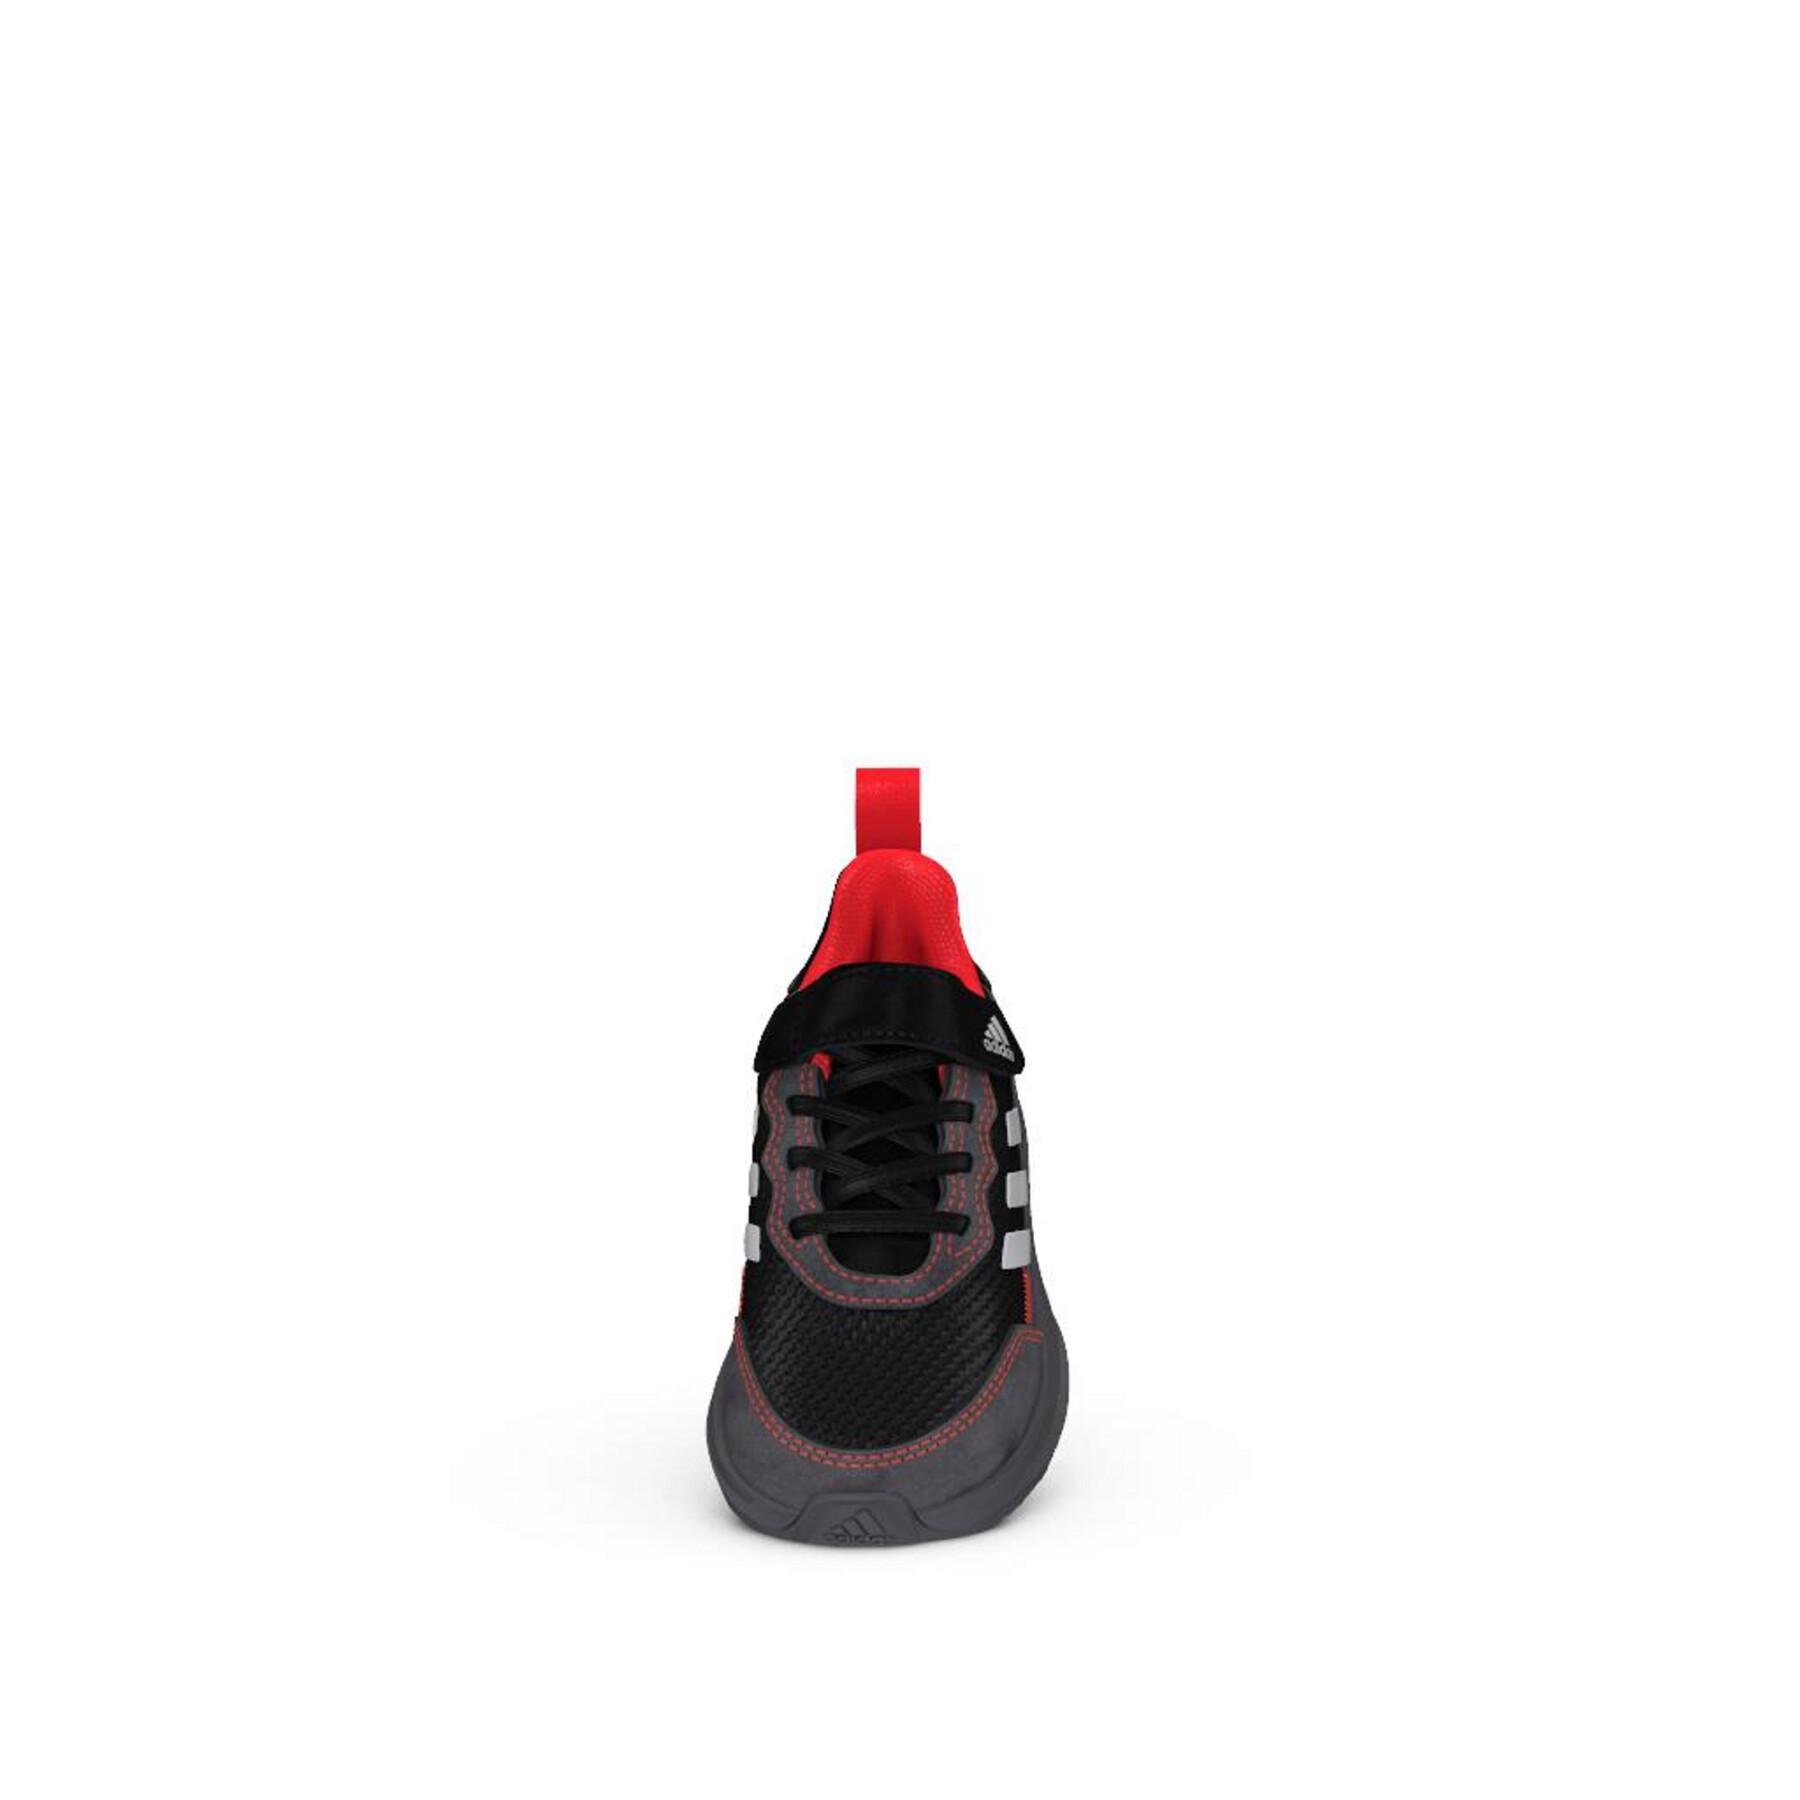 Chaussures de running baby adidas RapidaRun Elite and L